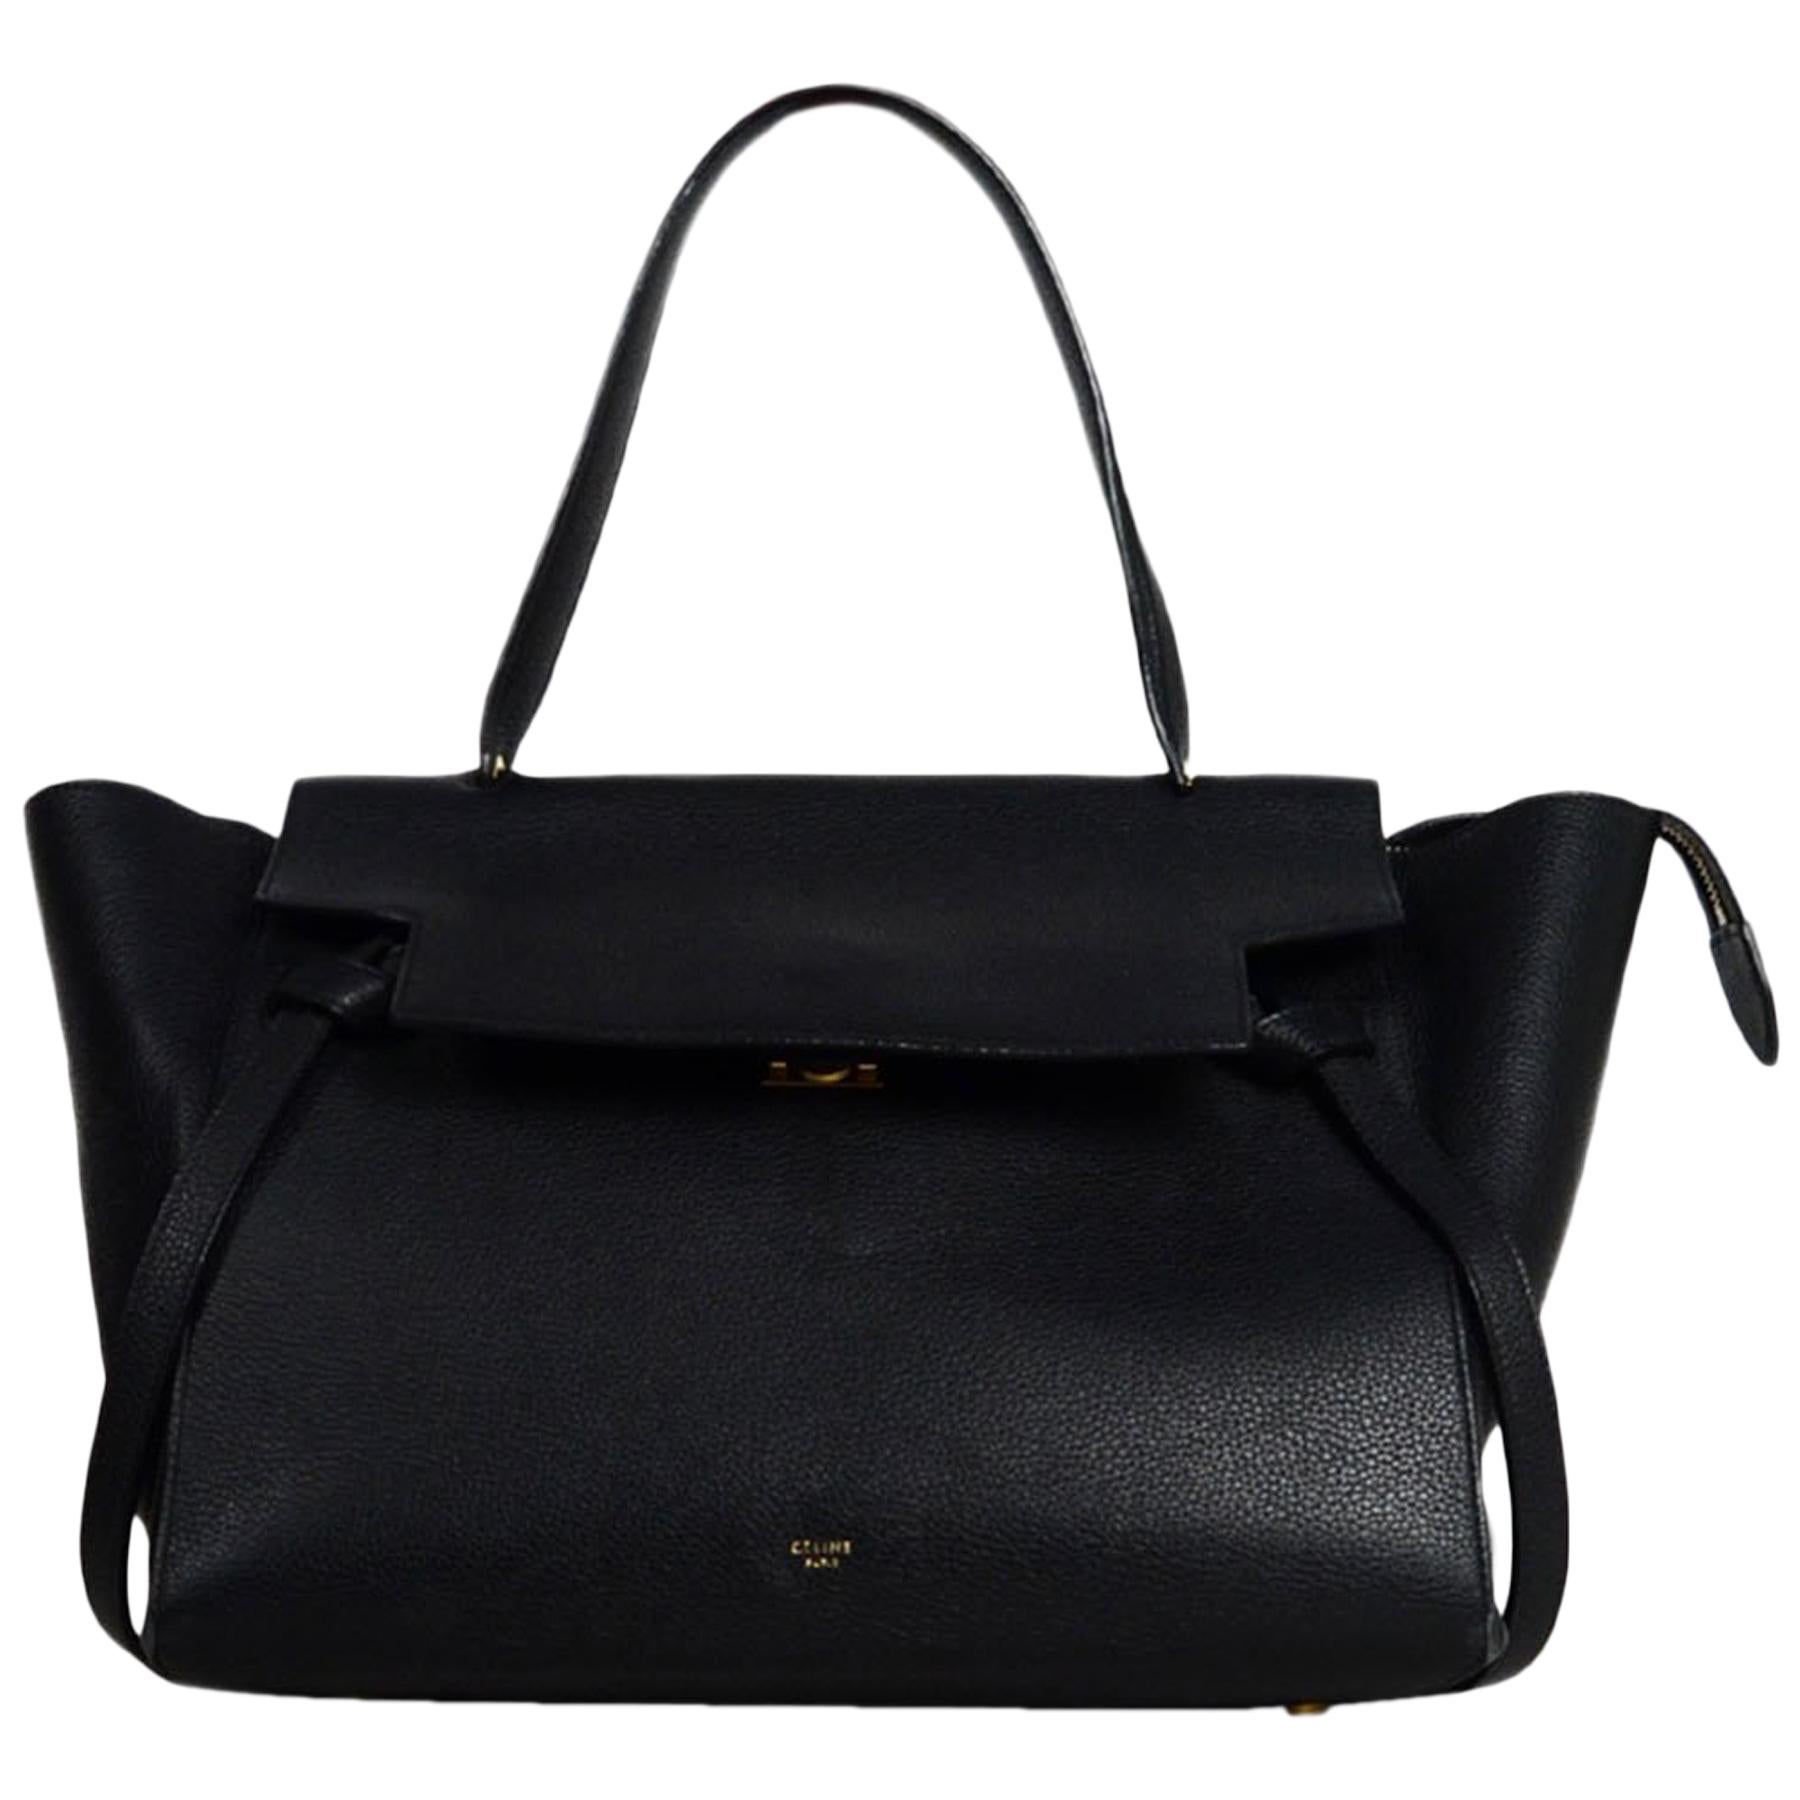 Celine Black Grained Calfskin Leather Small Belt Bag